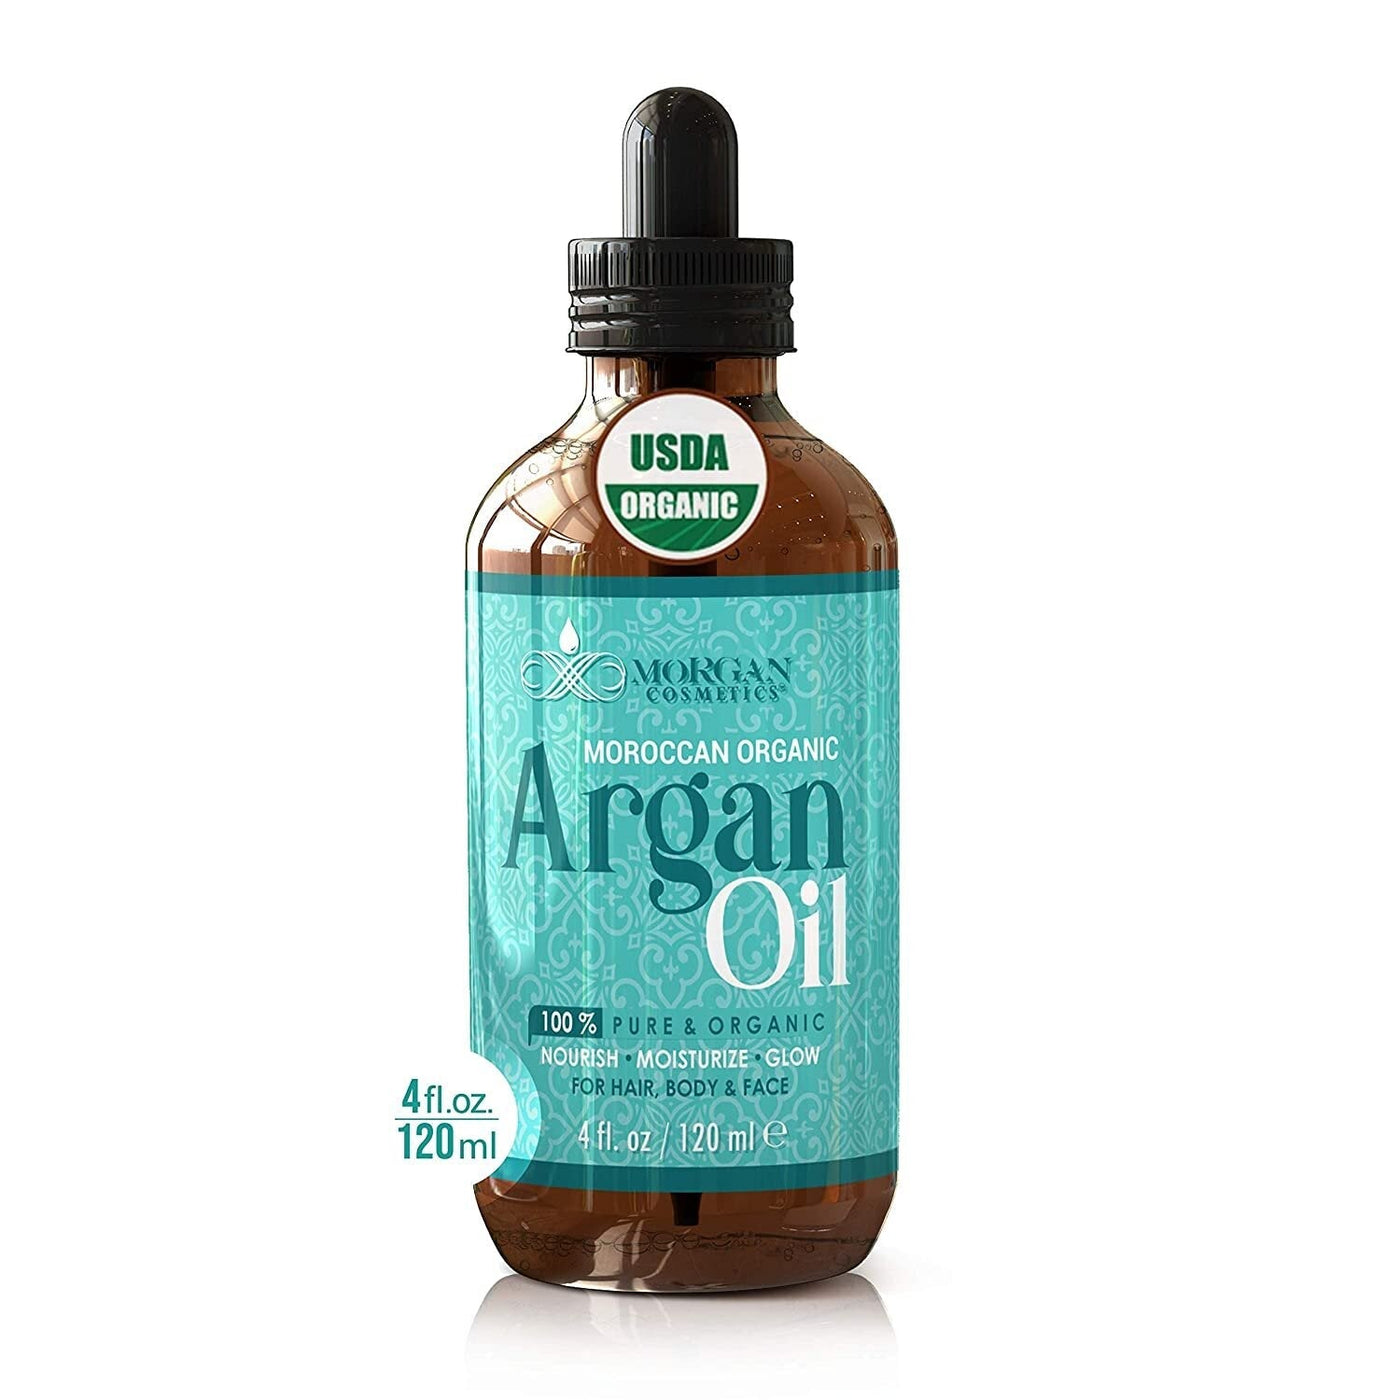 Organic Argan Oil 4 oz by Morgan Cosmetics